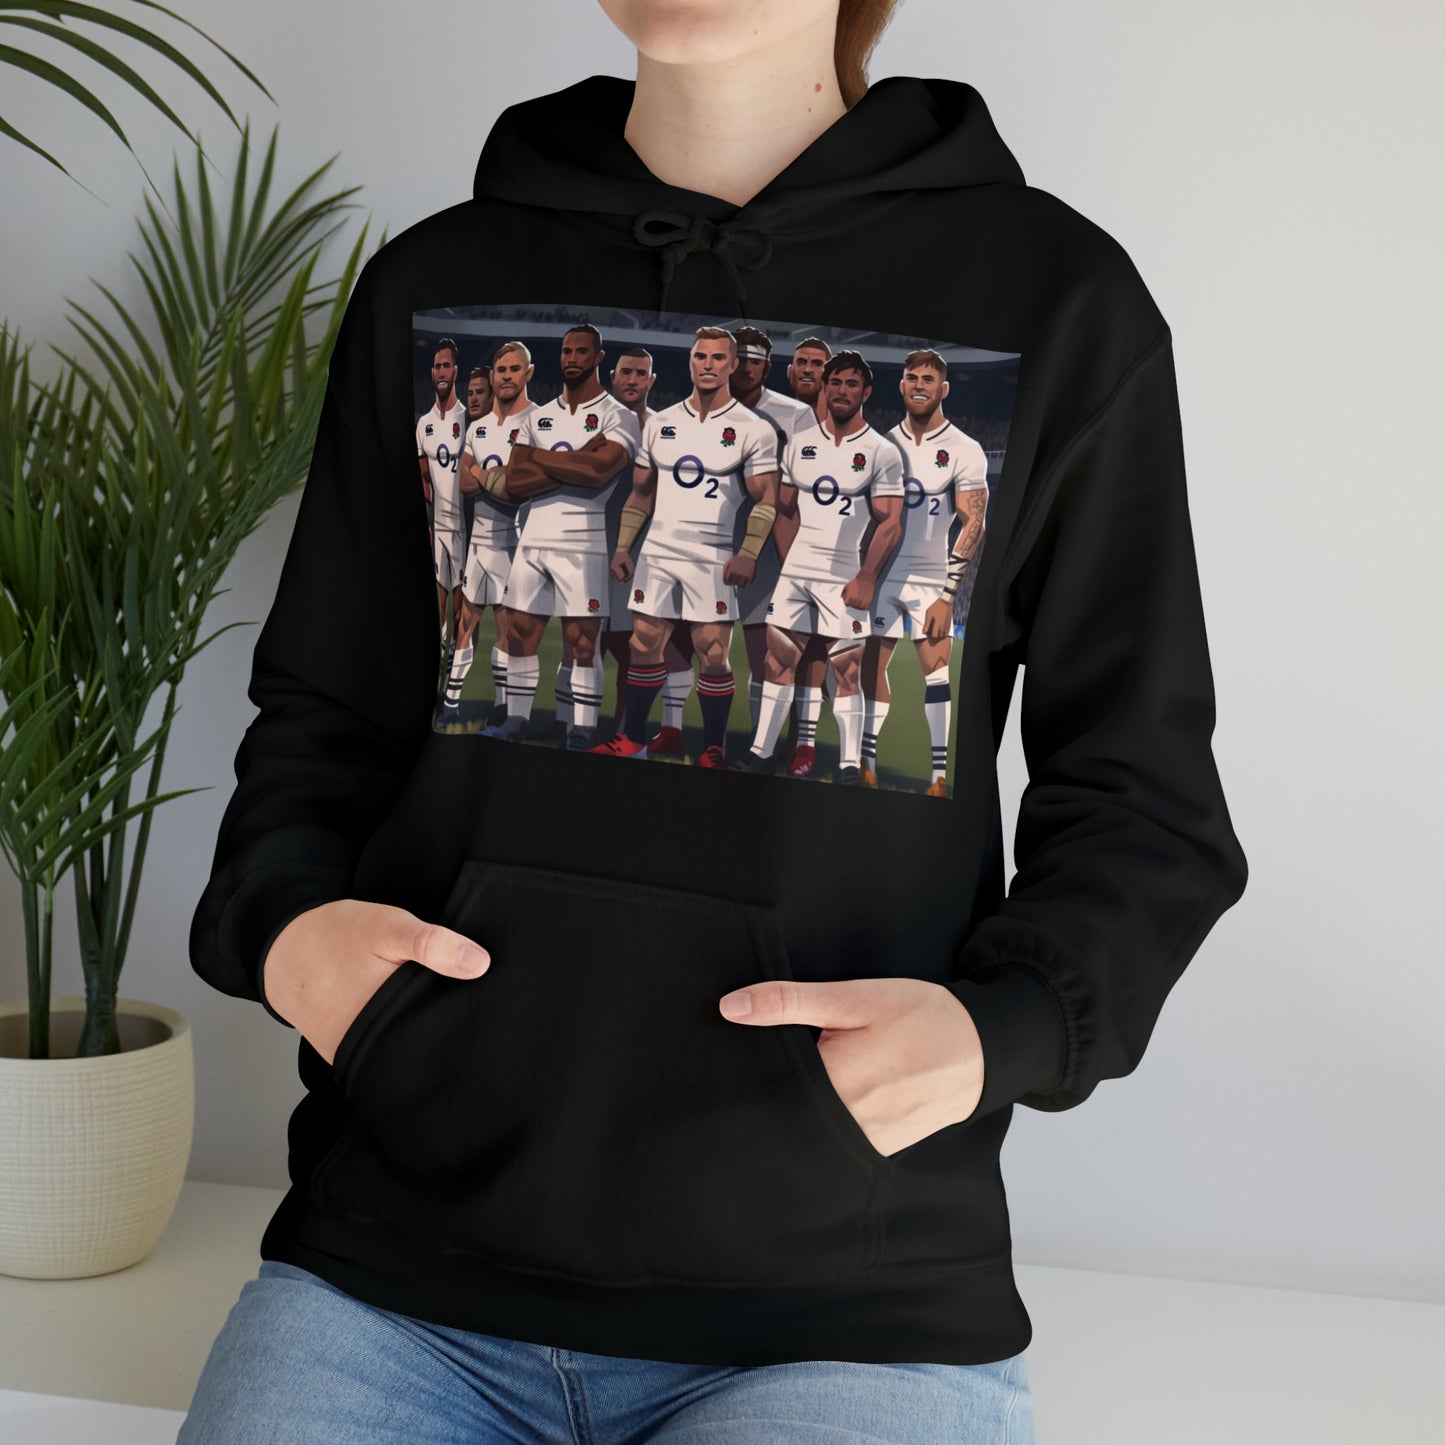 England Ready Team - dark hoodies